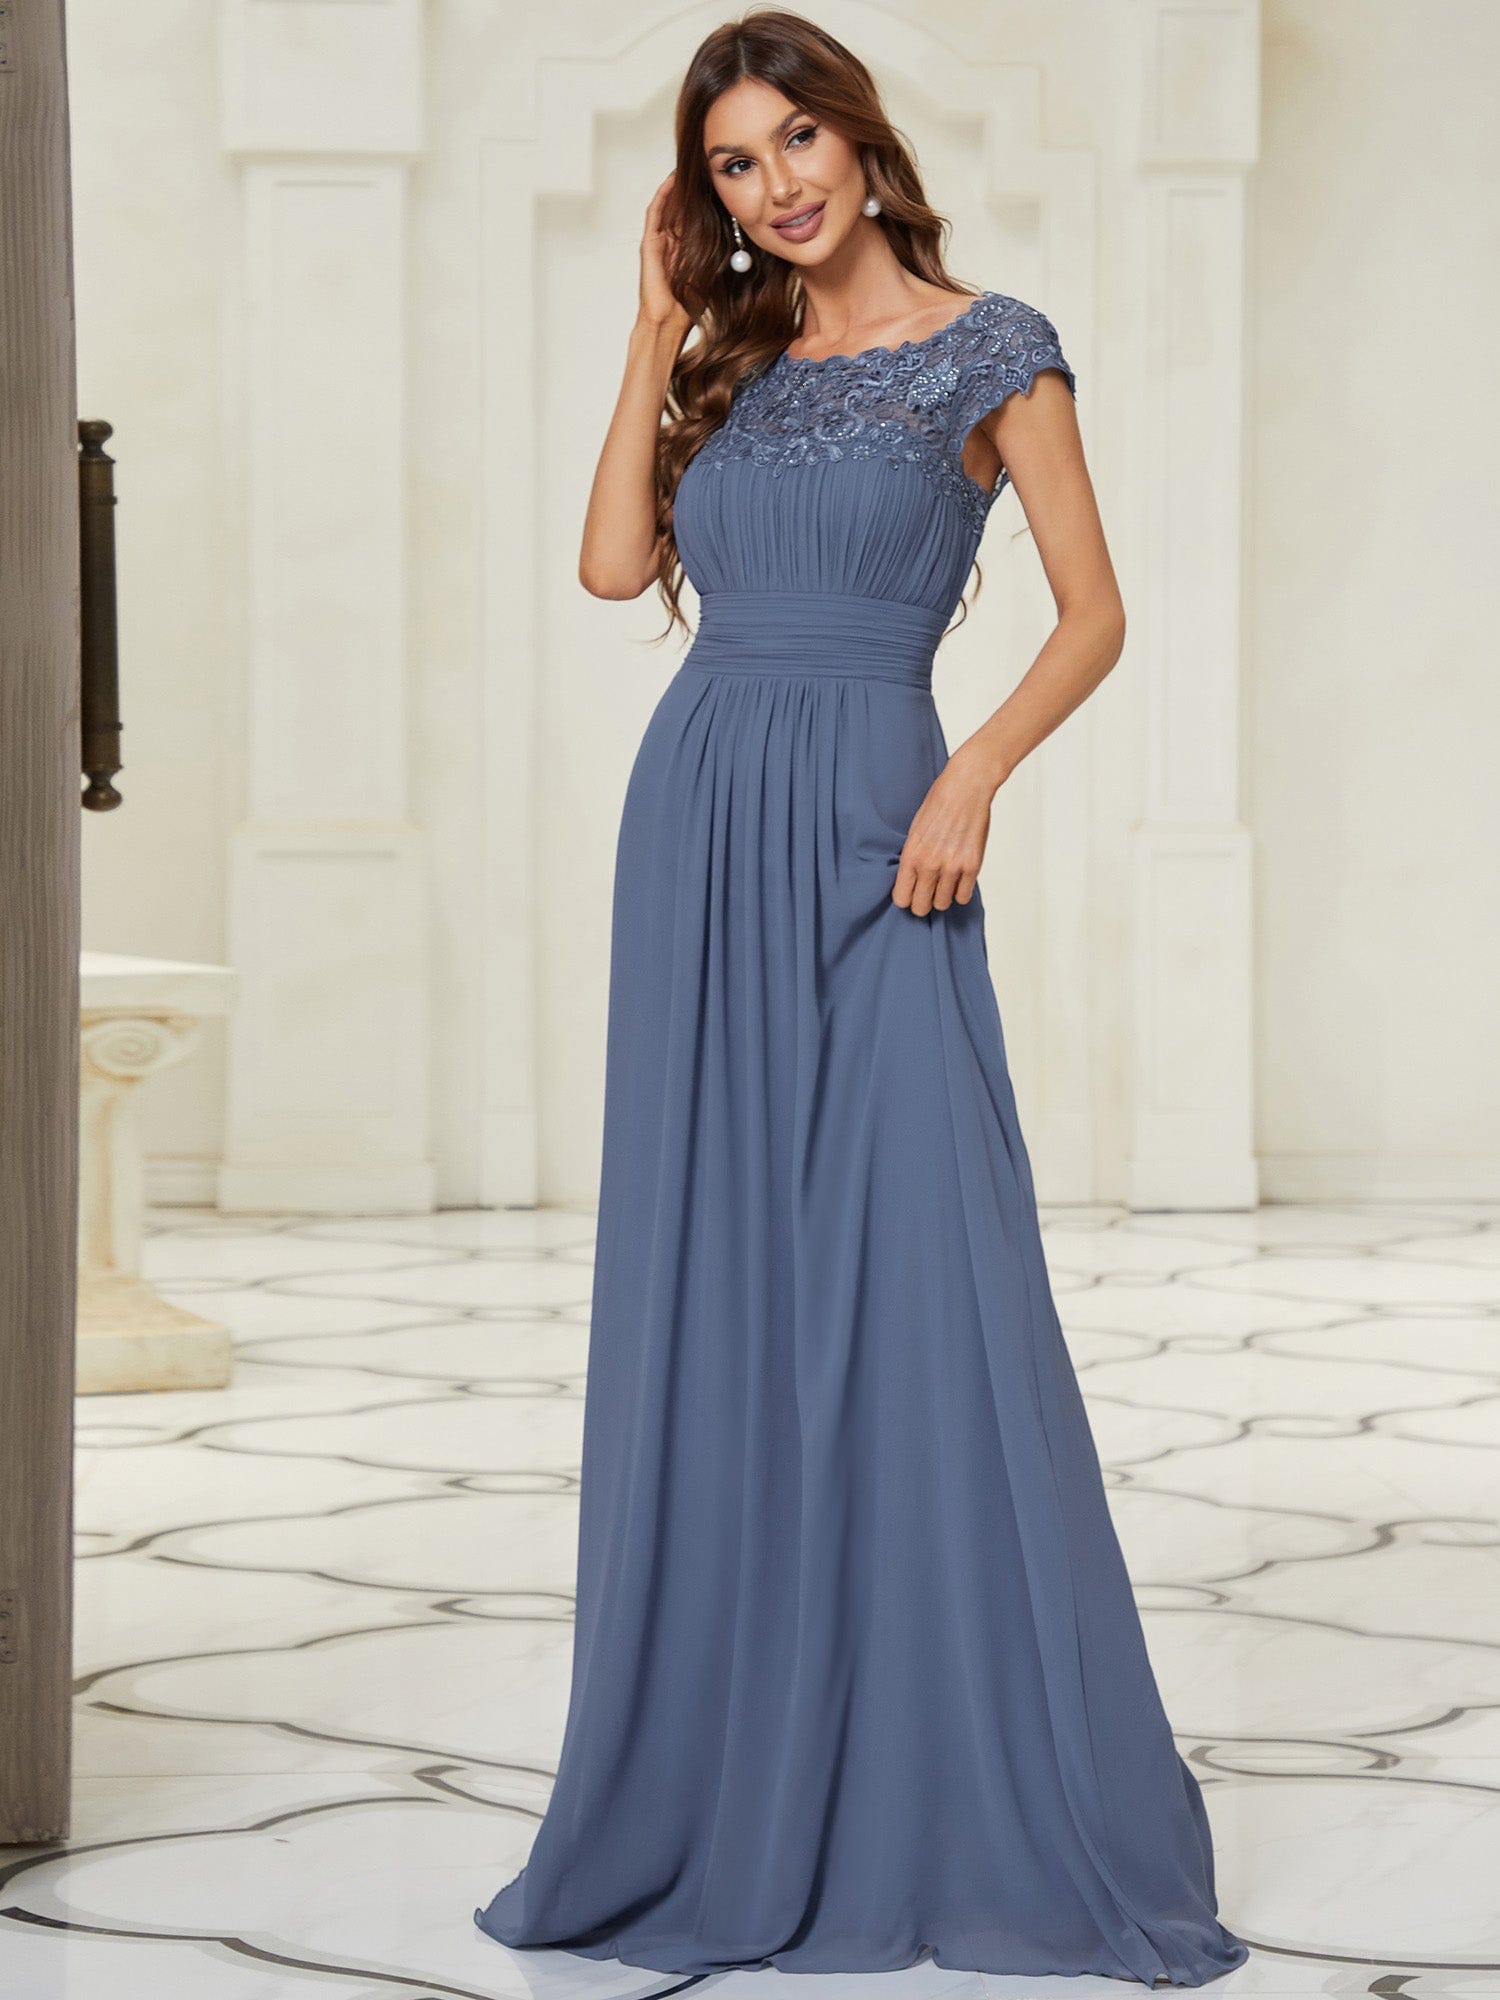 Maxi Lace Cap Sleeve Long Formal Evening Dress